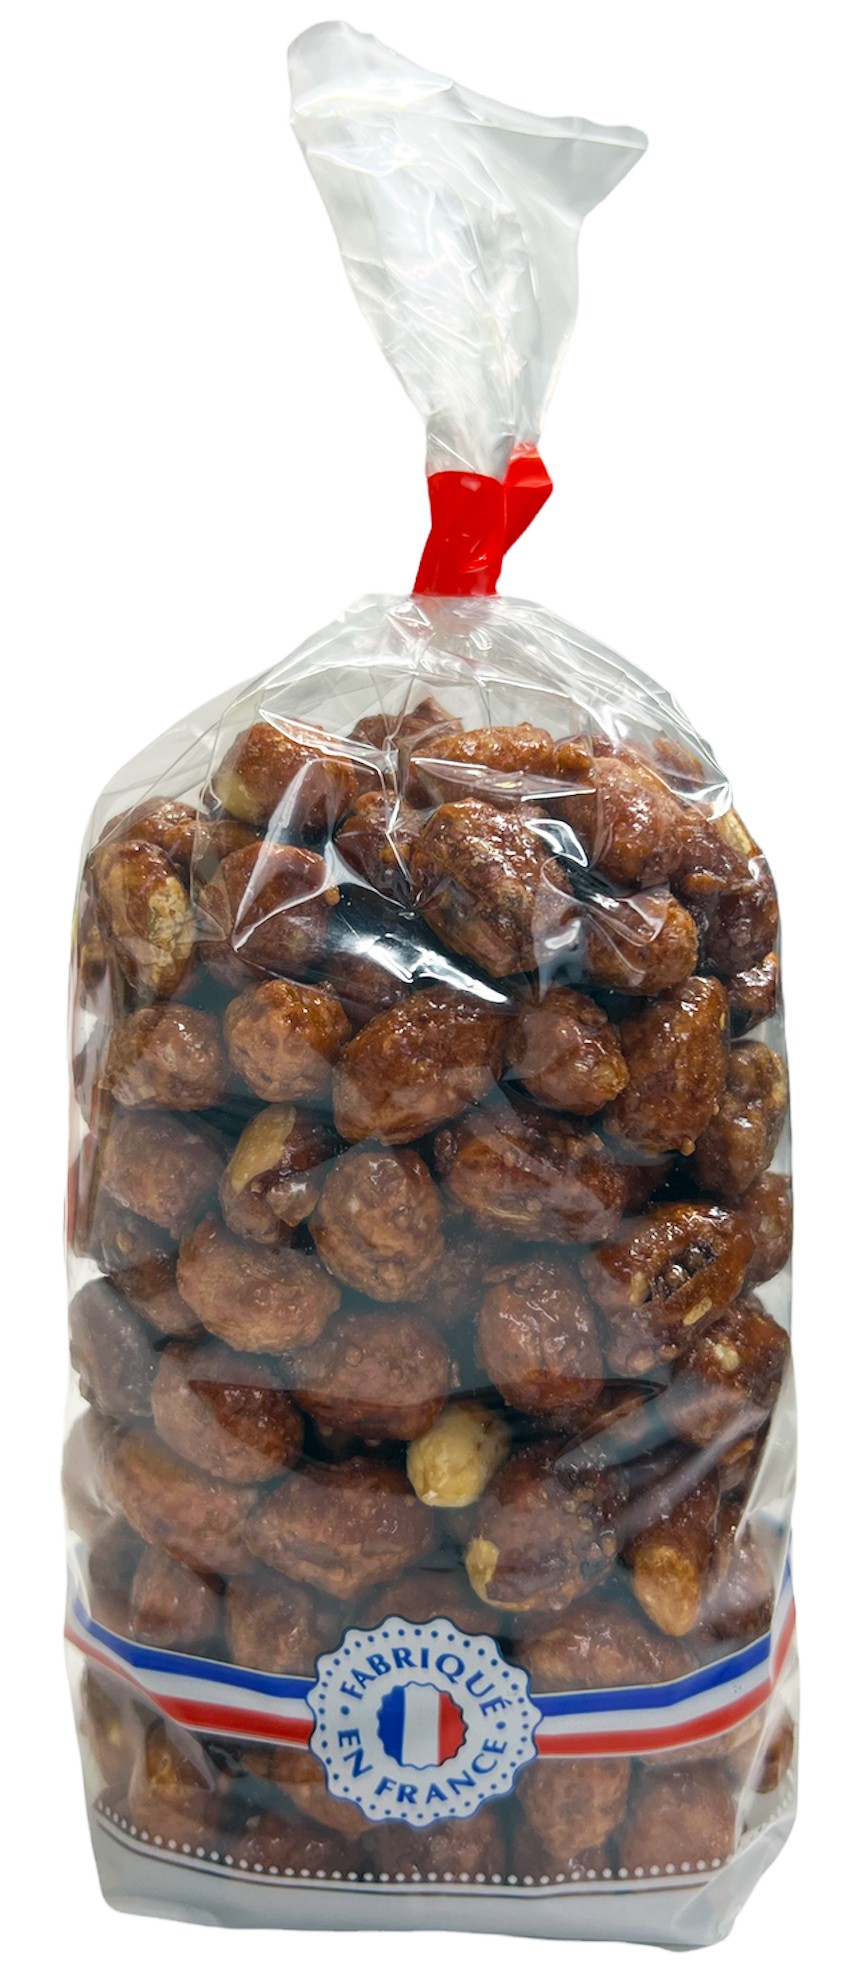 Chouchou cacahuète caramélisé 200g - Leroydelagourmandise